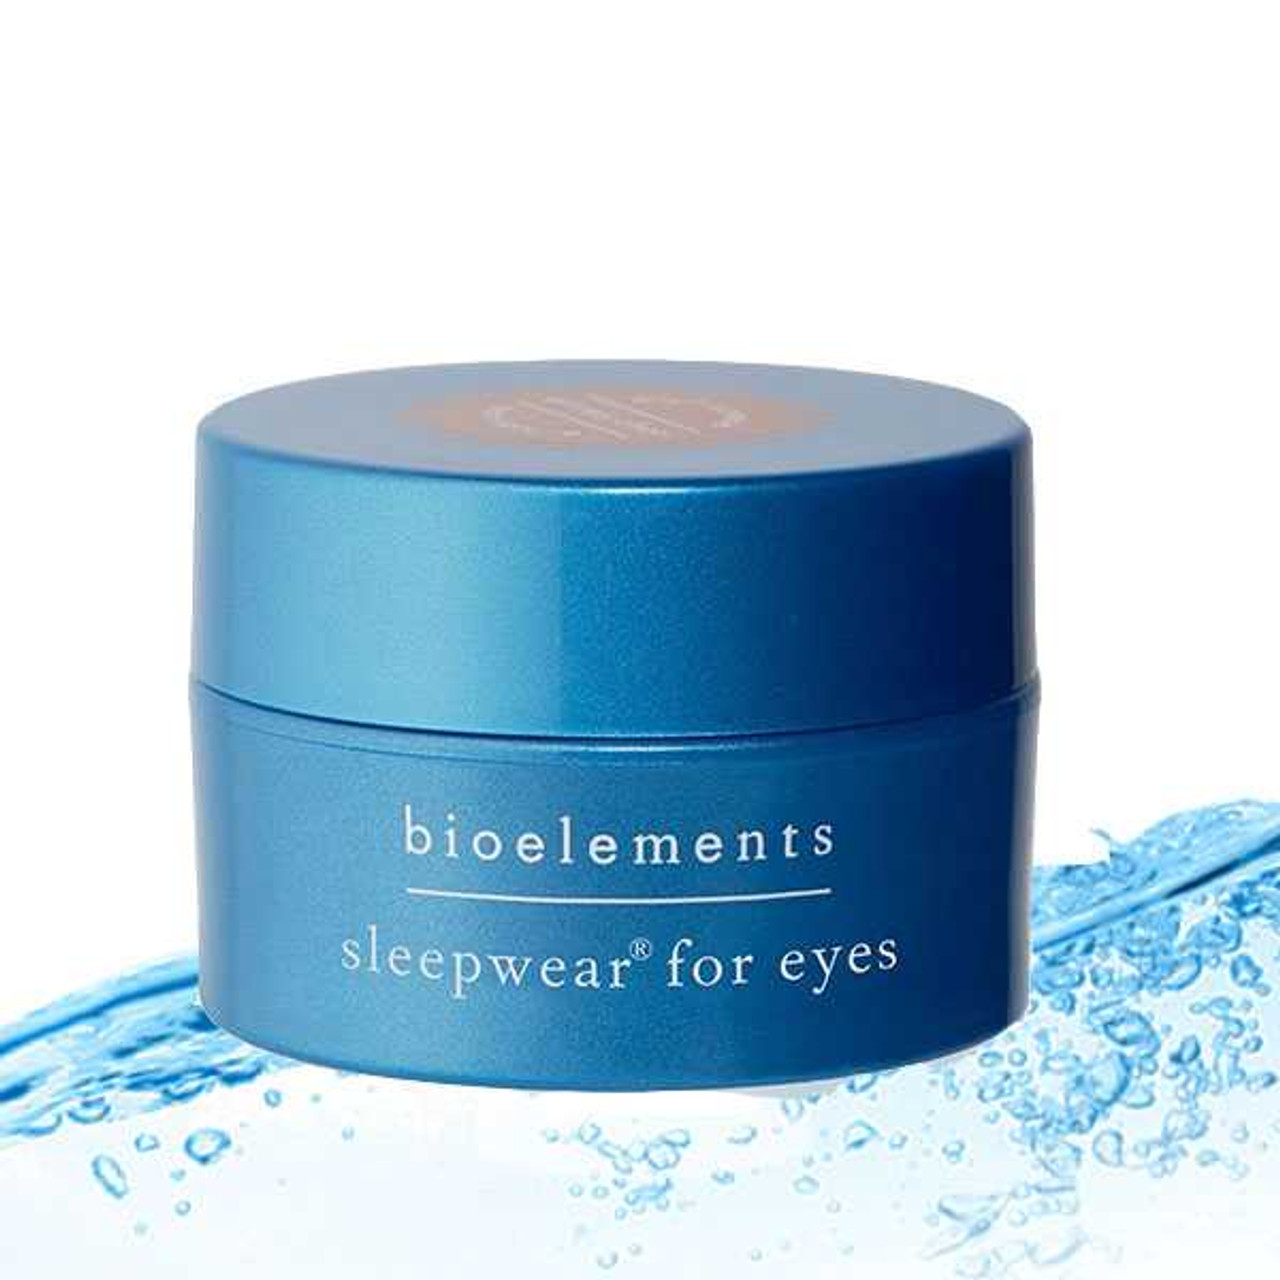 Bioelements Sleepwear for Eyes - .5 oz